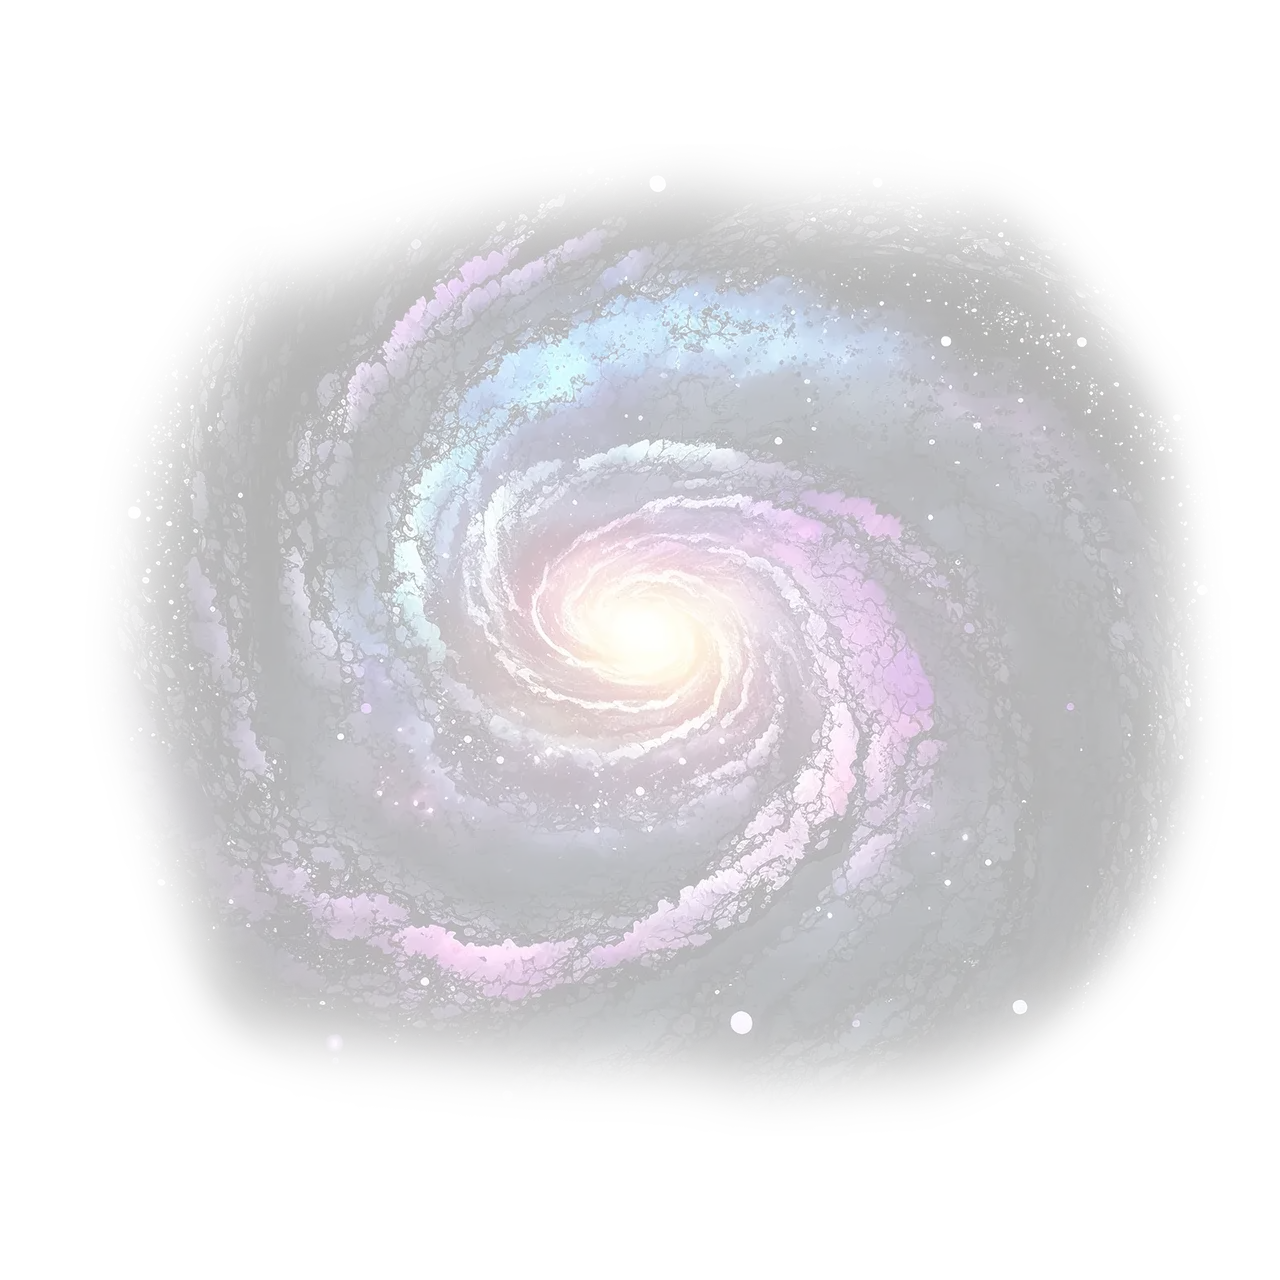 Milkyway background image